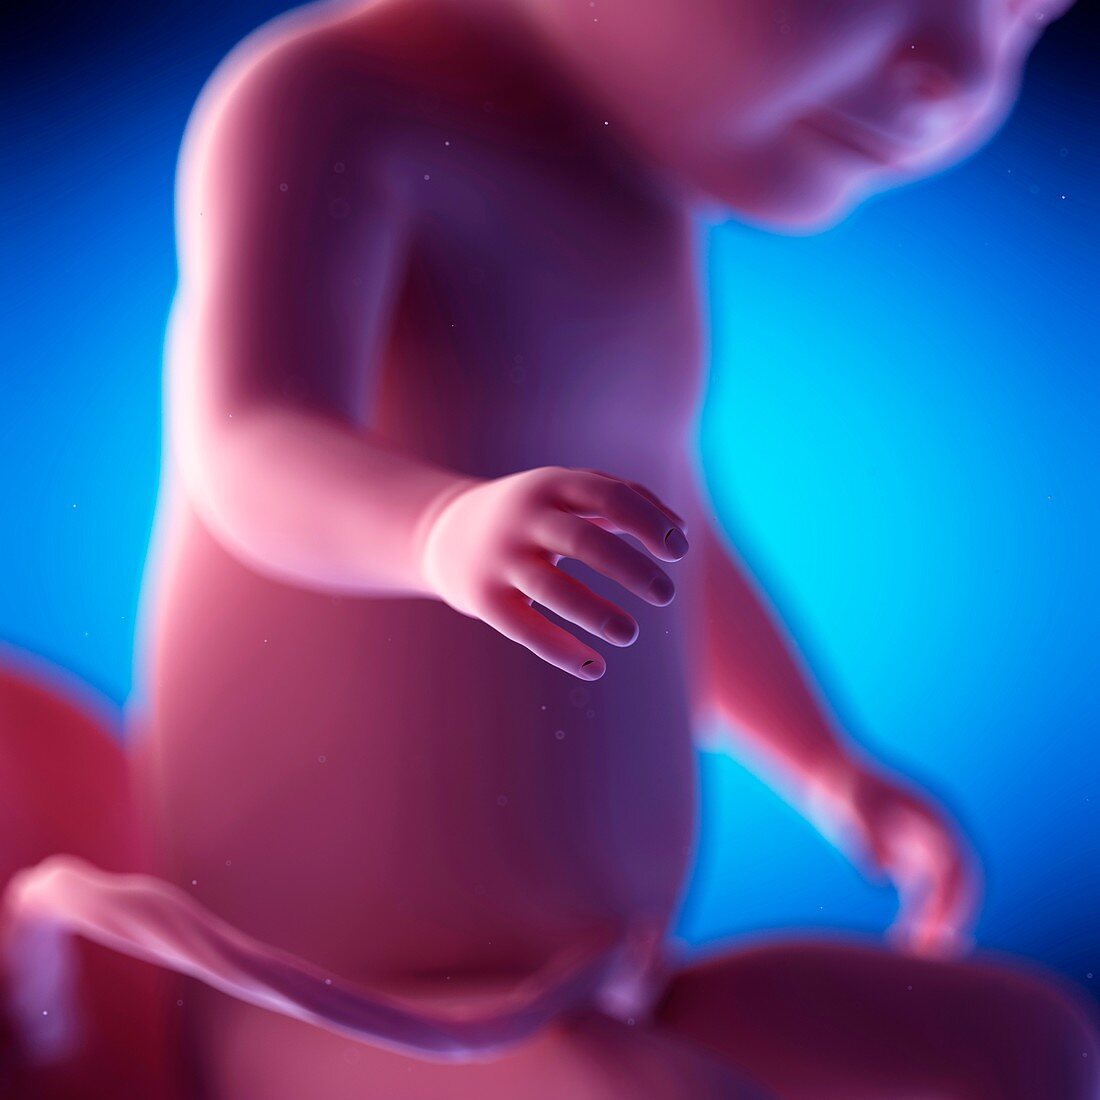 Human fetus at week 31 of gestation, illustration